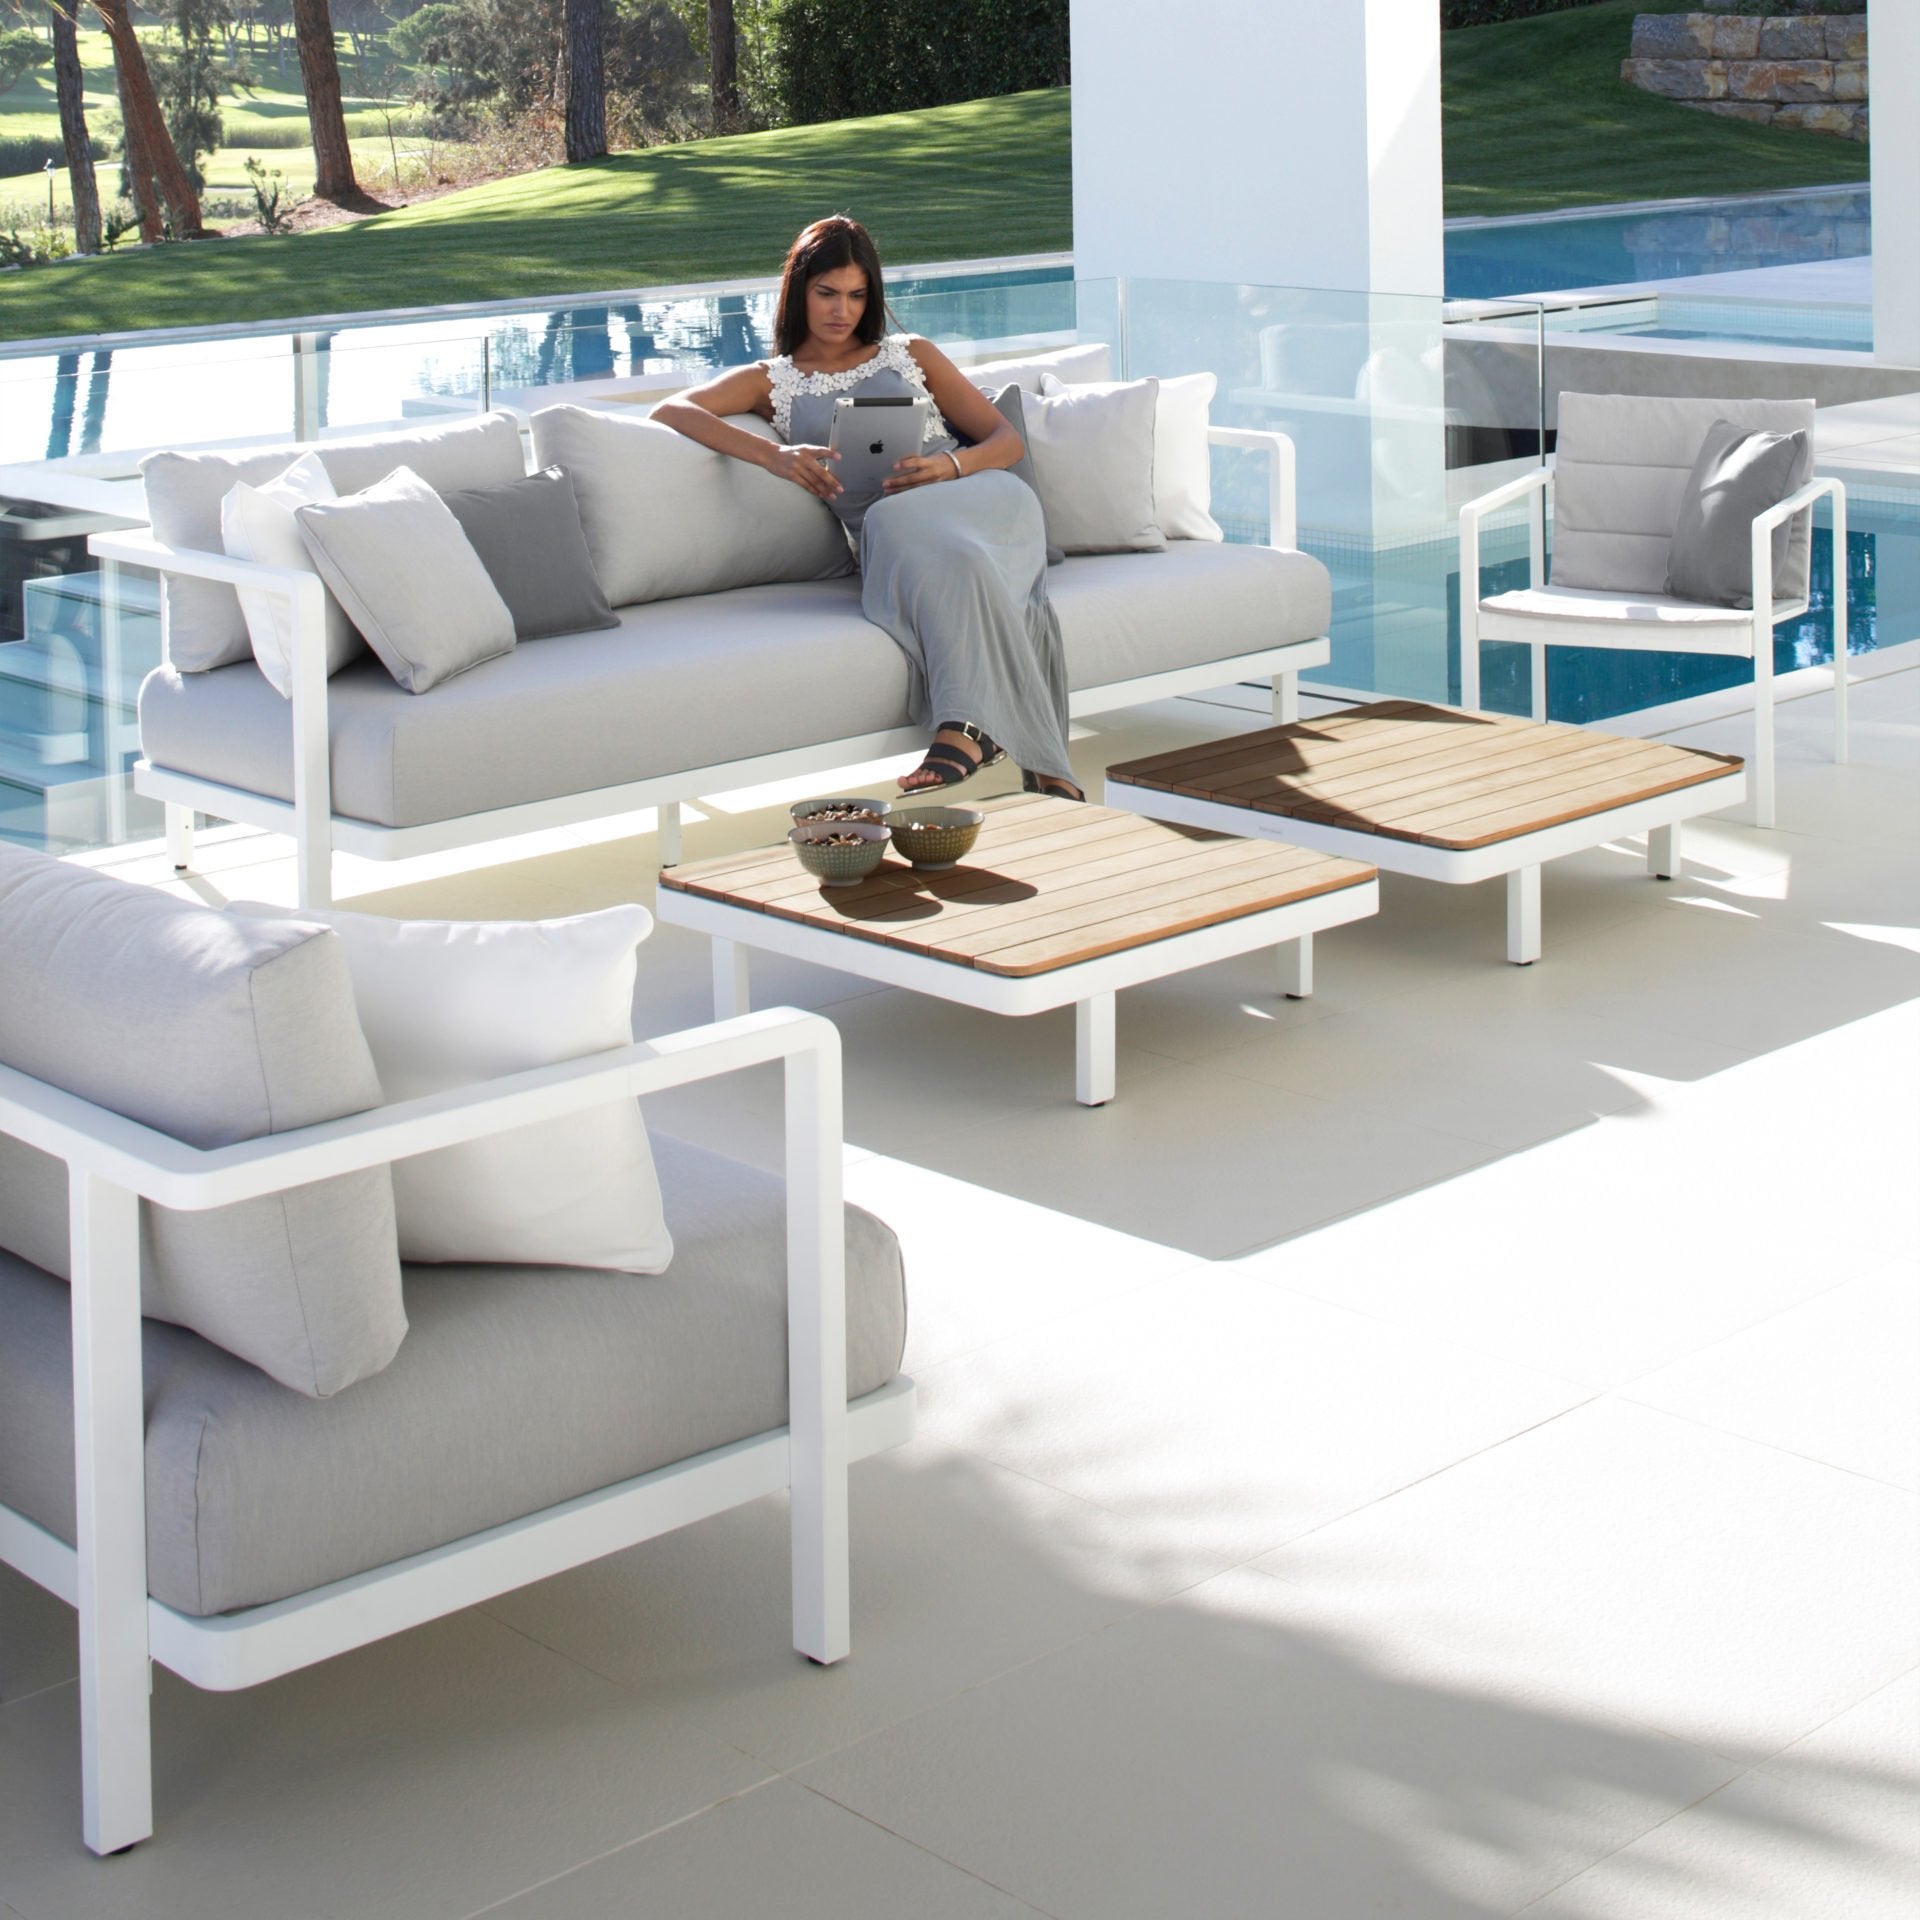 Alura Lounge 160 Lth Table 160x80x34cm Sand Ceramic Tabletop Taupe Grey